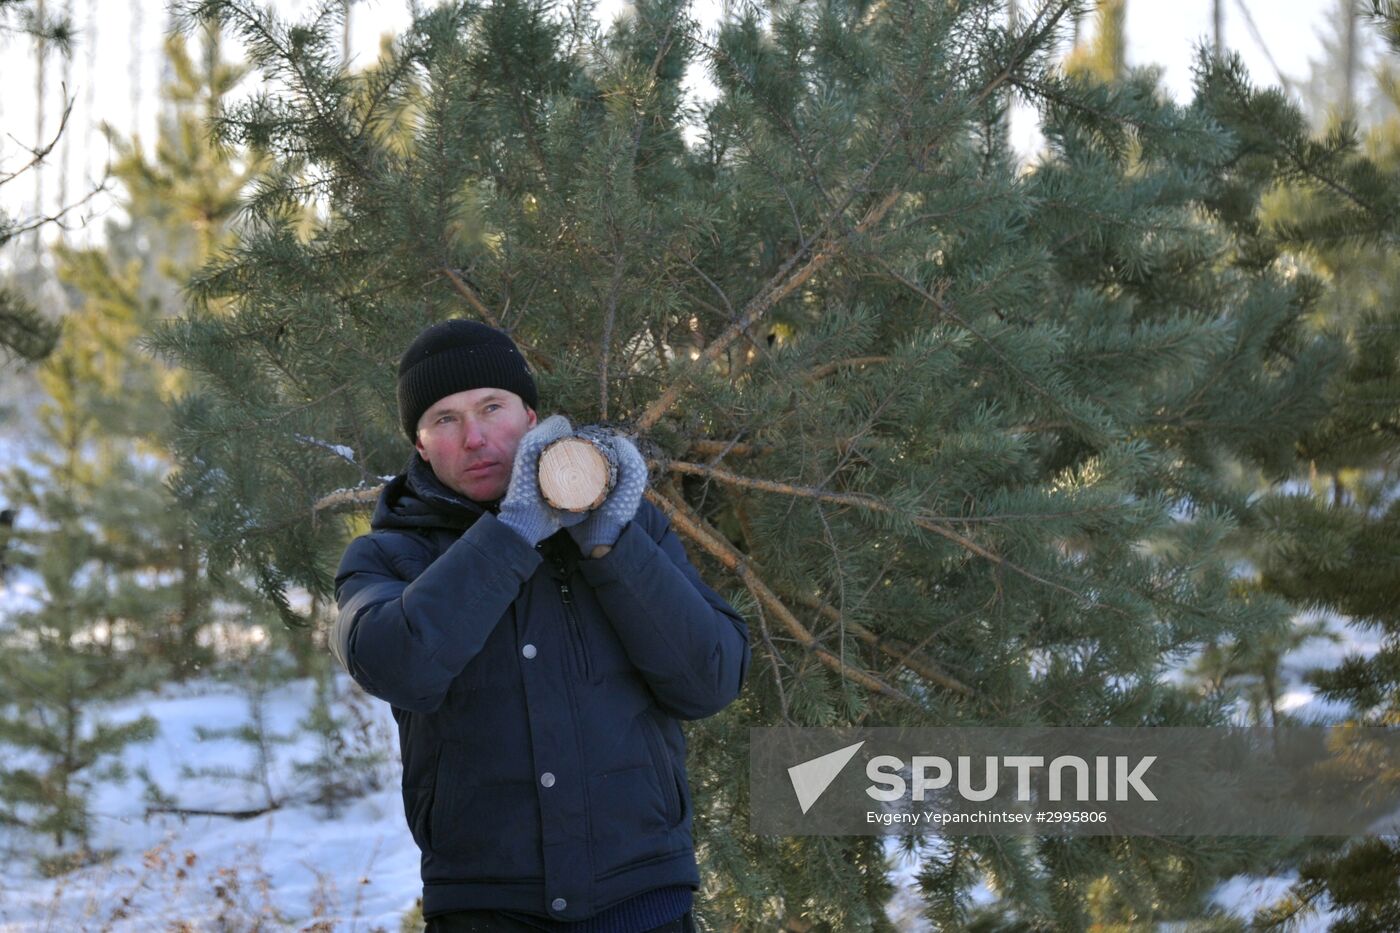 Cutting down fir trees ahead of New Year in Trans-Baikal Territory